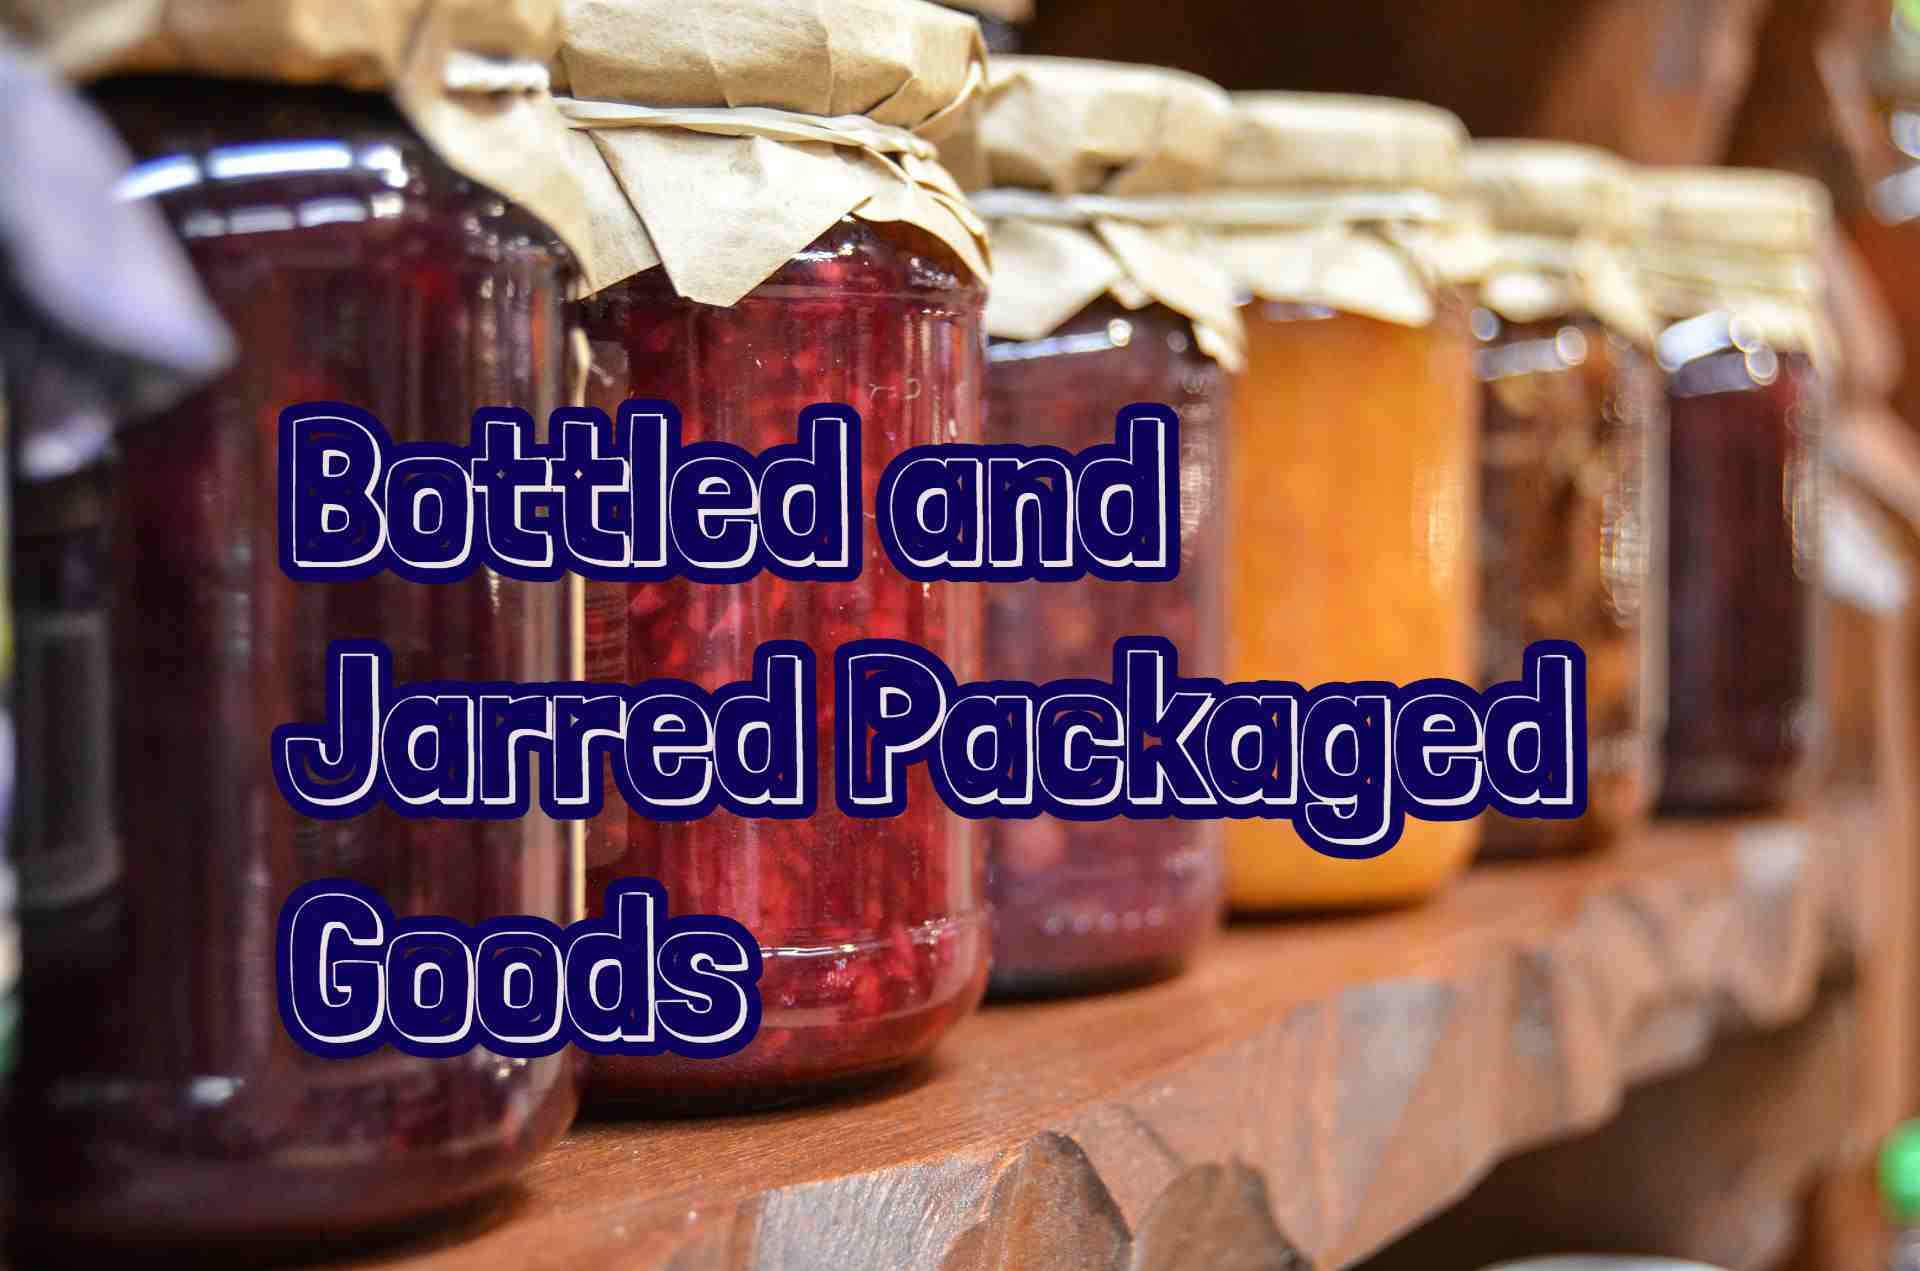 bottled and jarred packaged goods